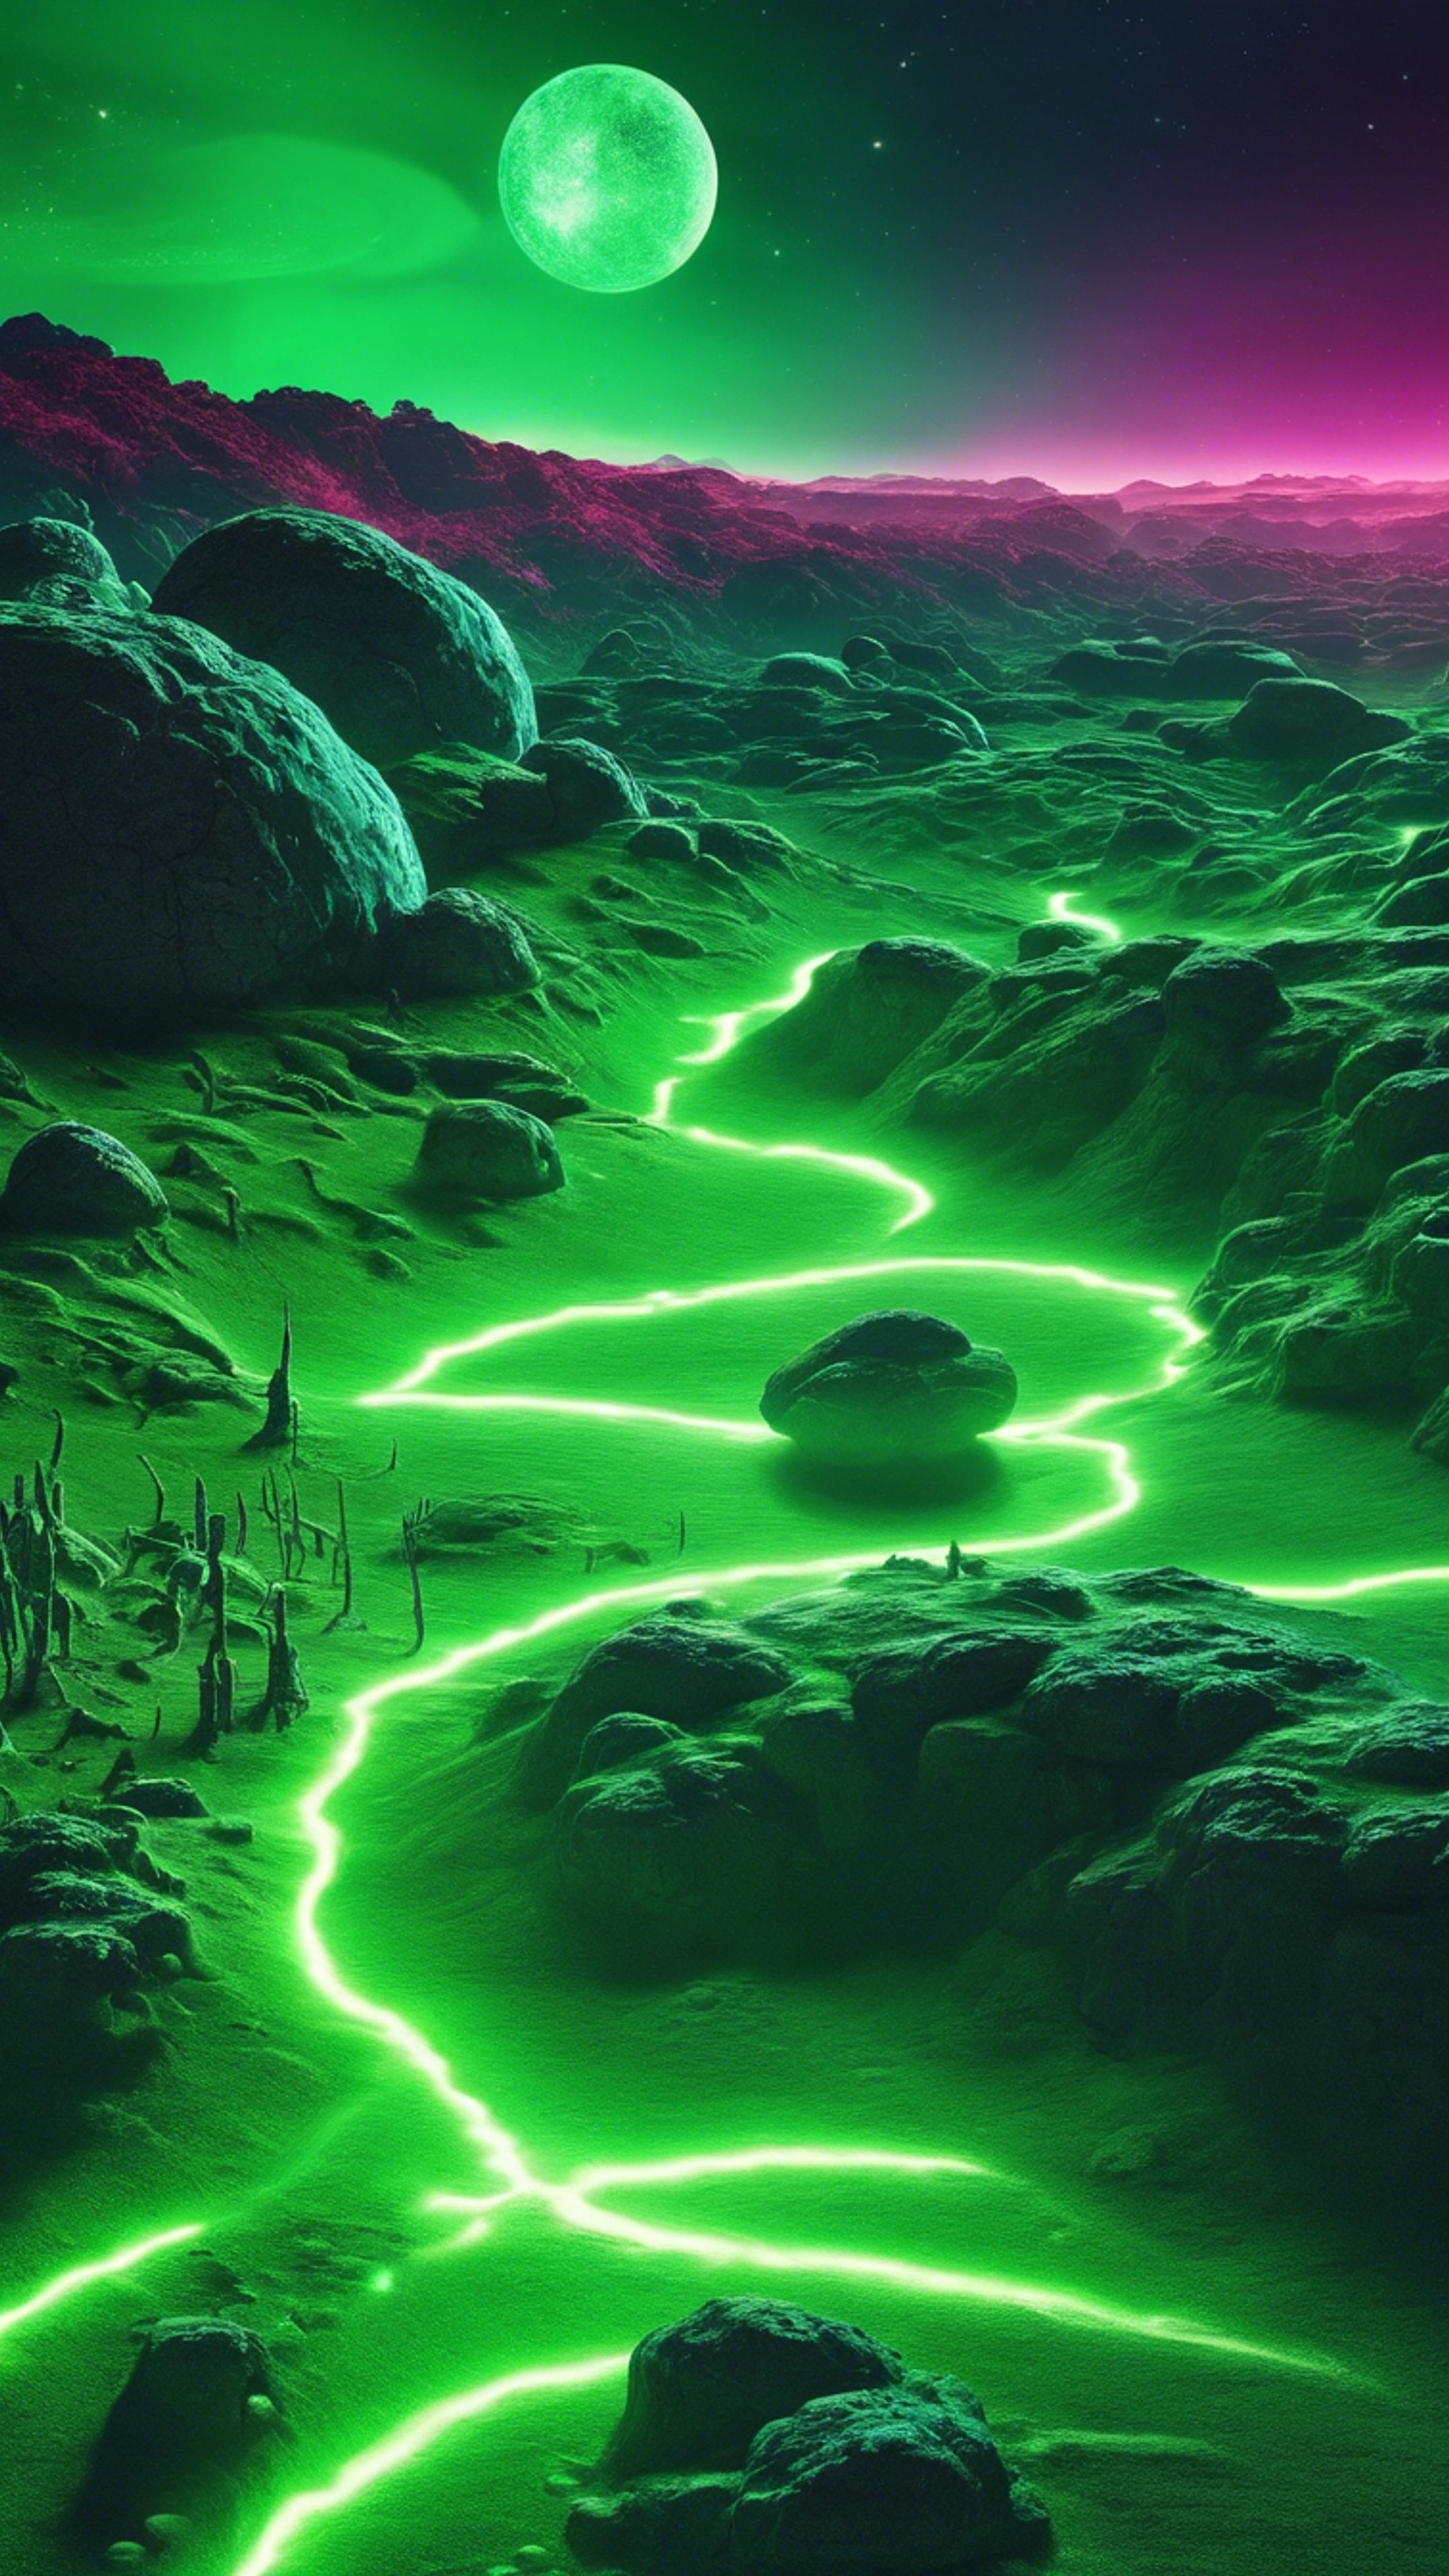 An alien planet landscape illuminated with cool neon green light. 벽지[c1d7fd56055c47ca89e3]